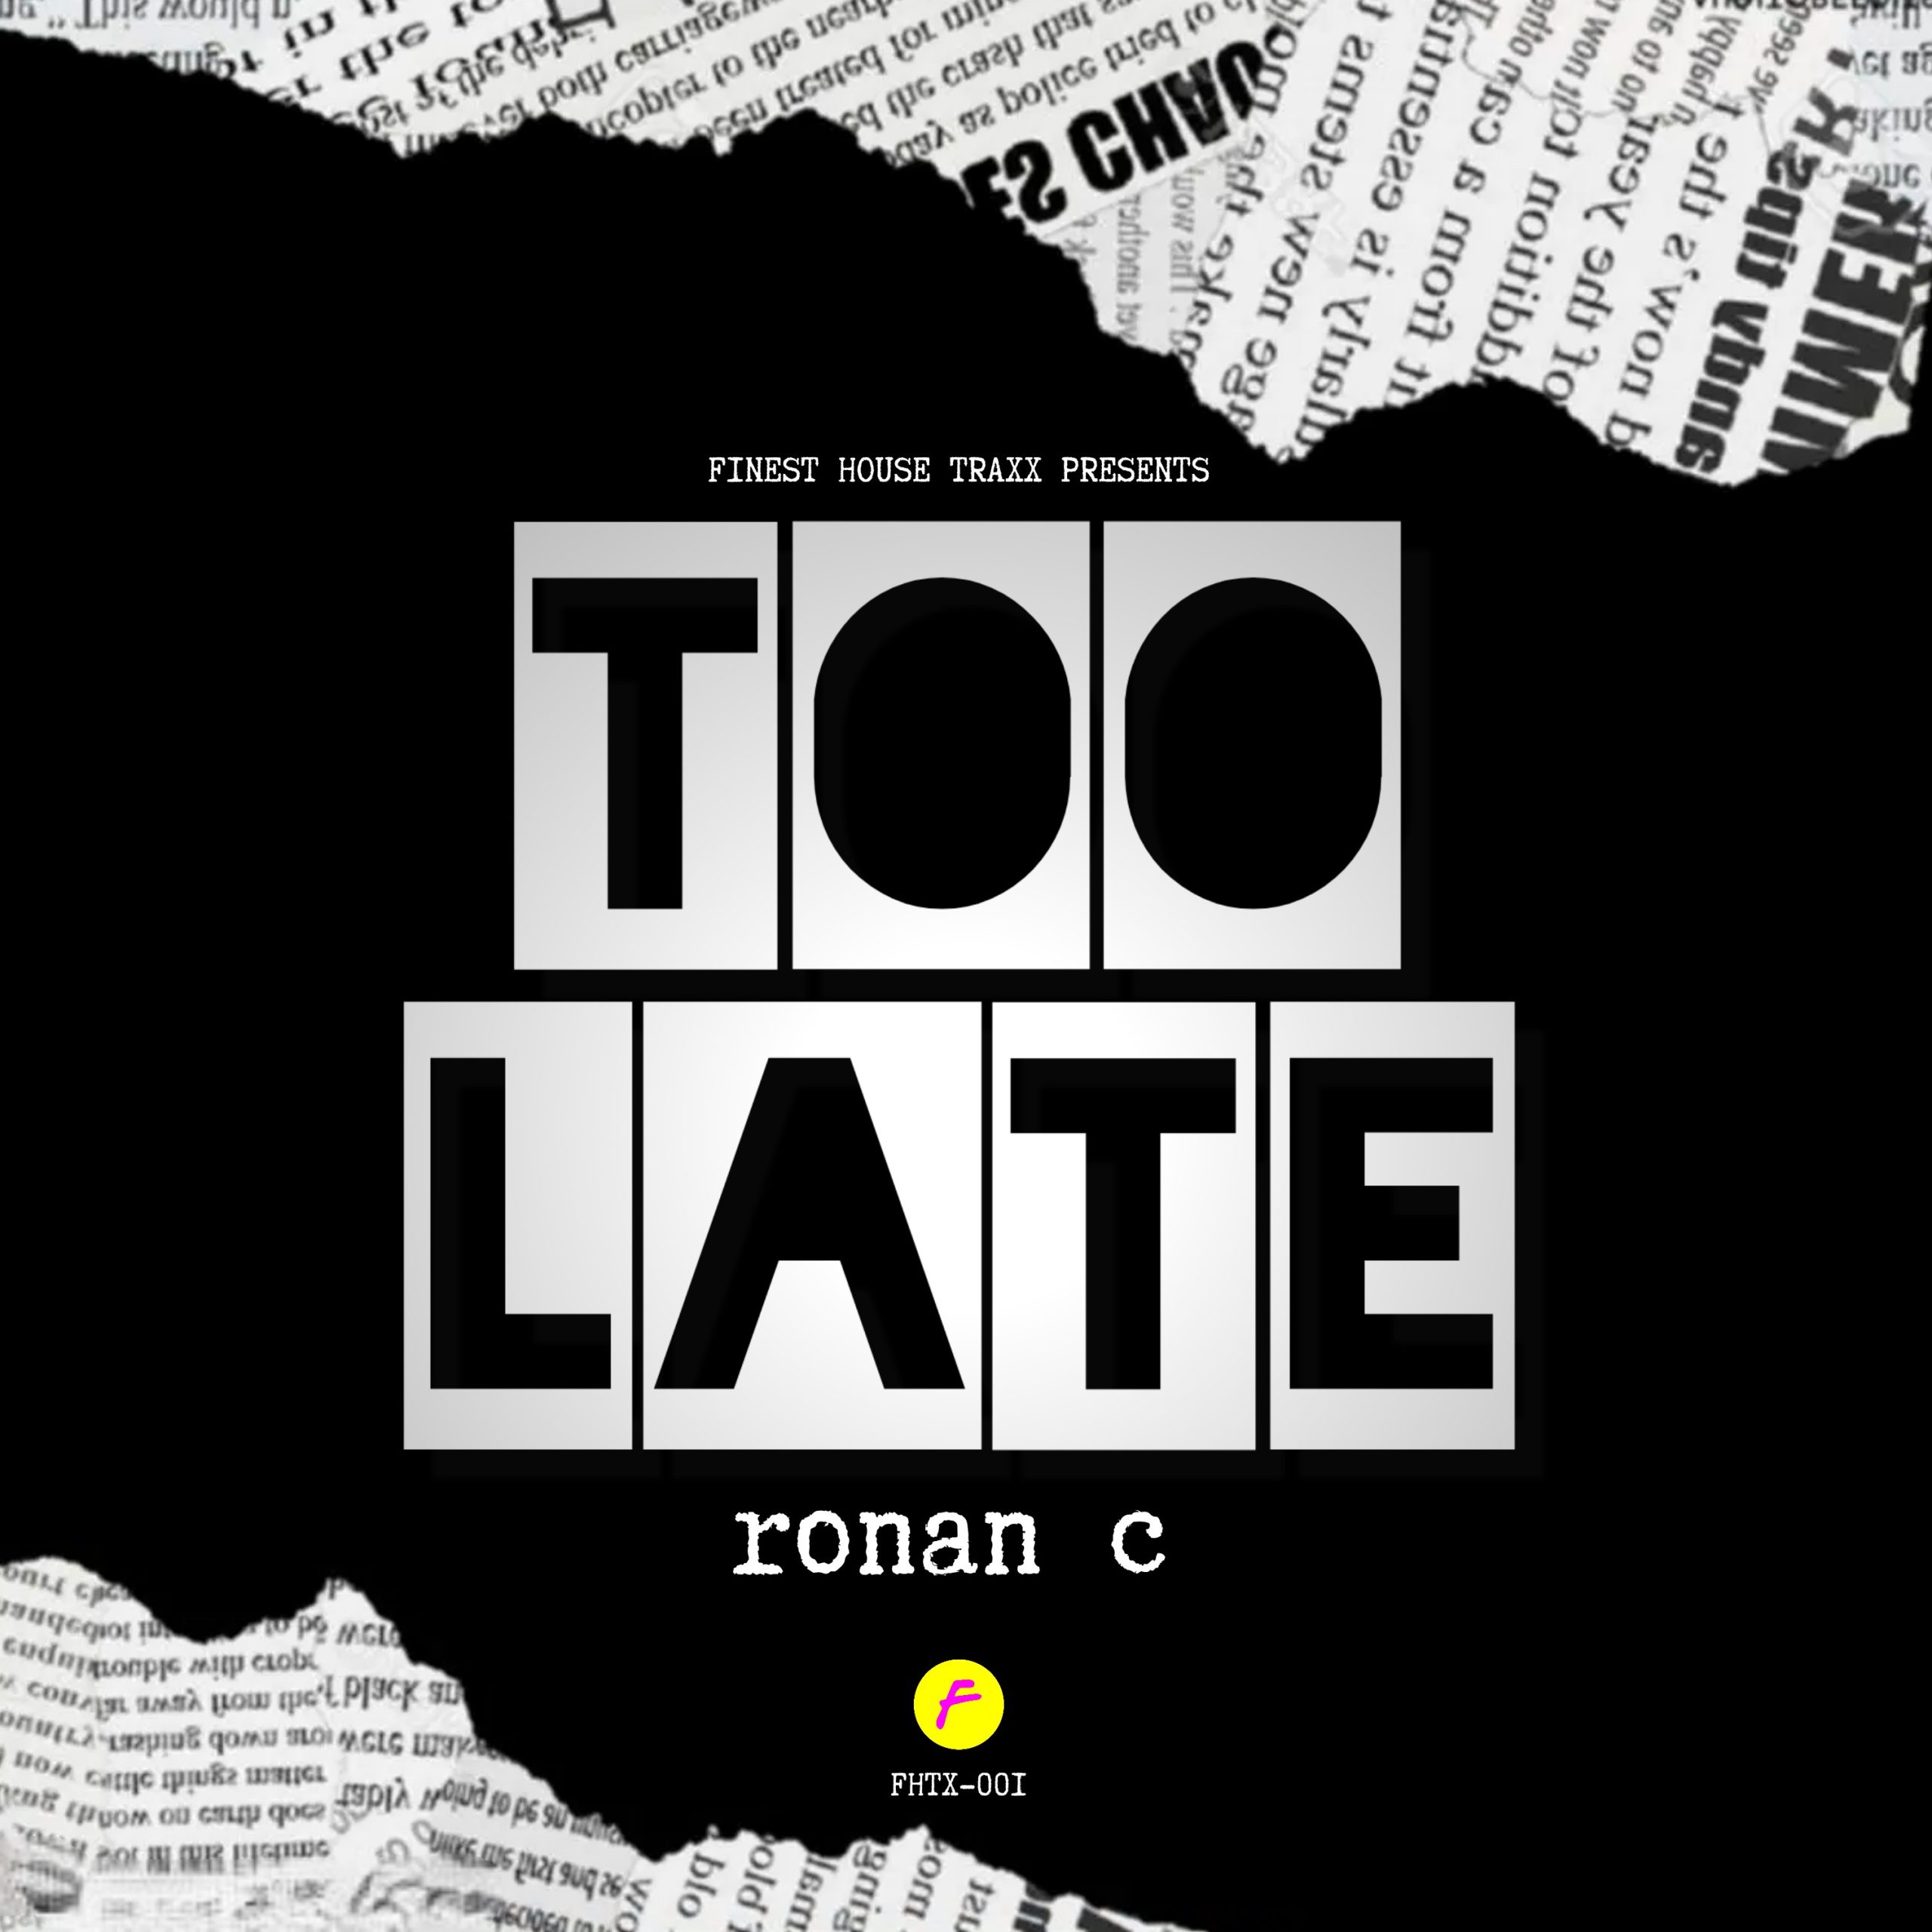 Ronan C - Too Late artwork